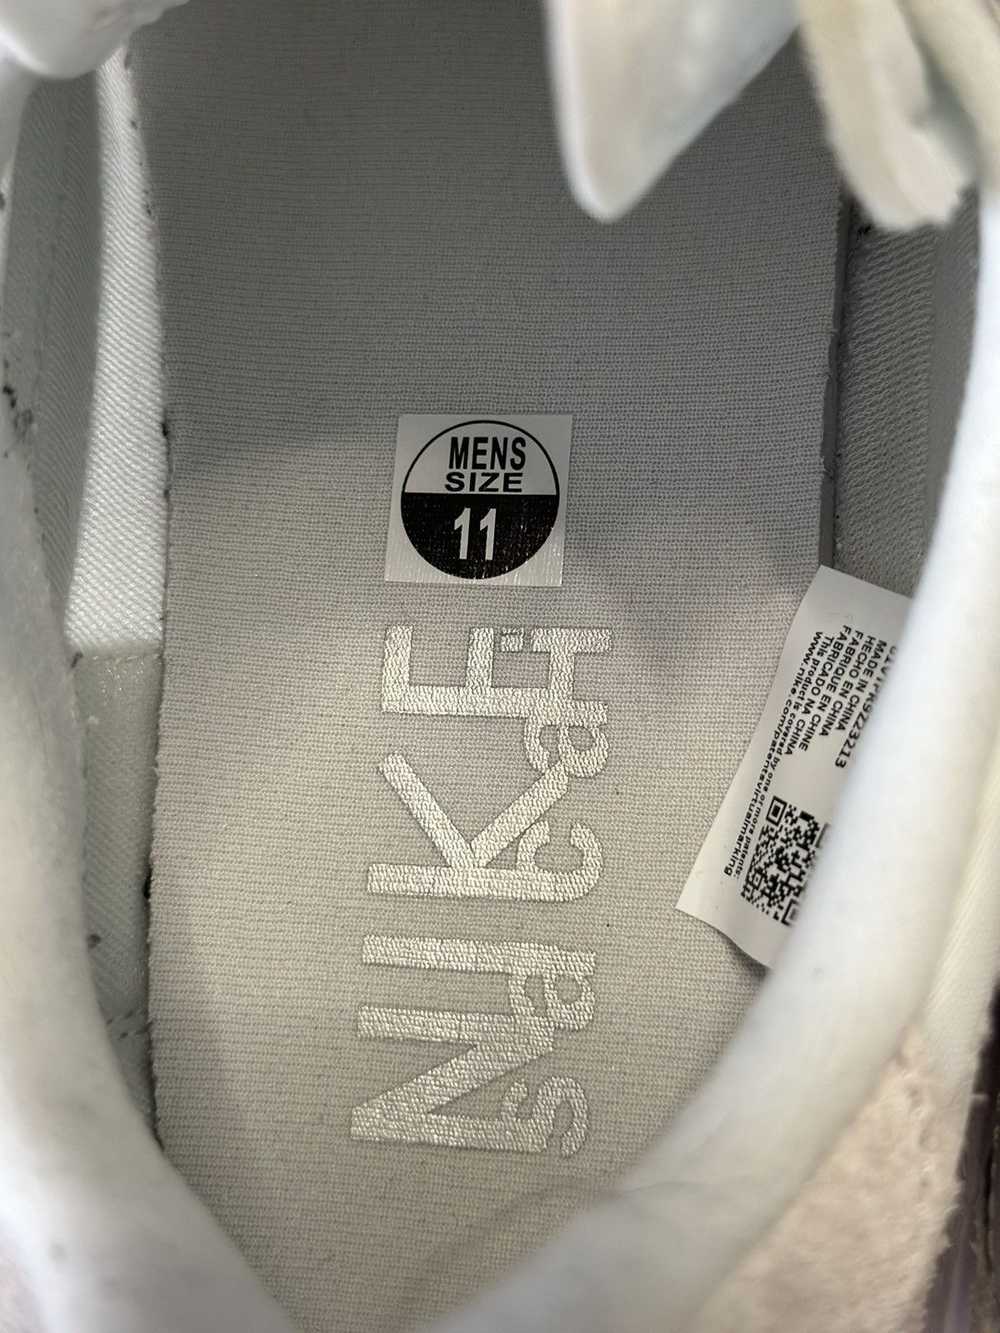 Nike Nike sacai shoes men’s size 11 - image 4